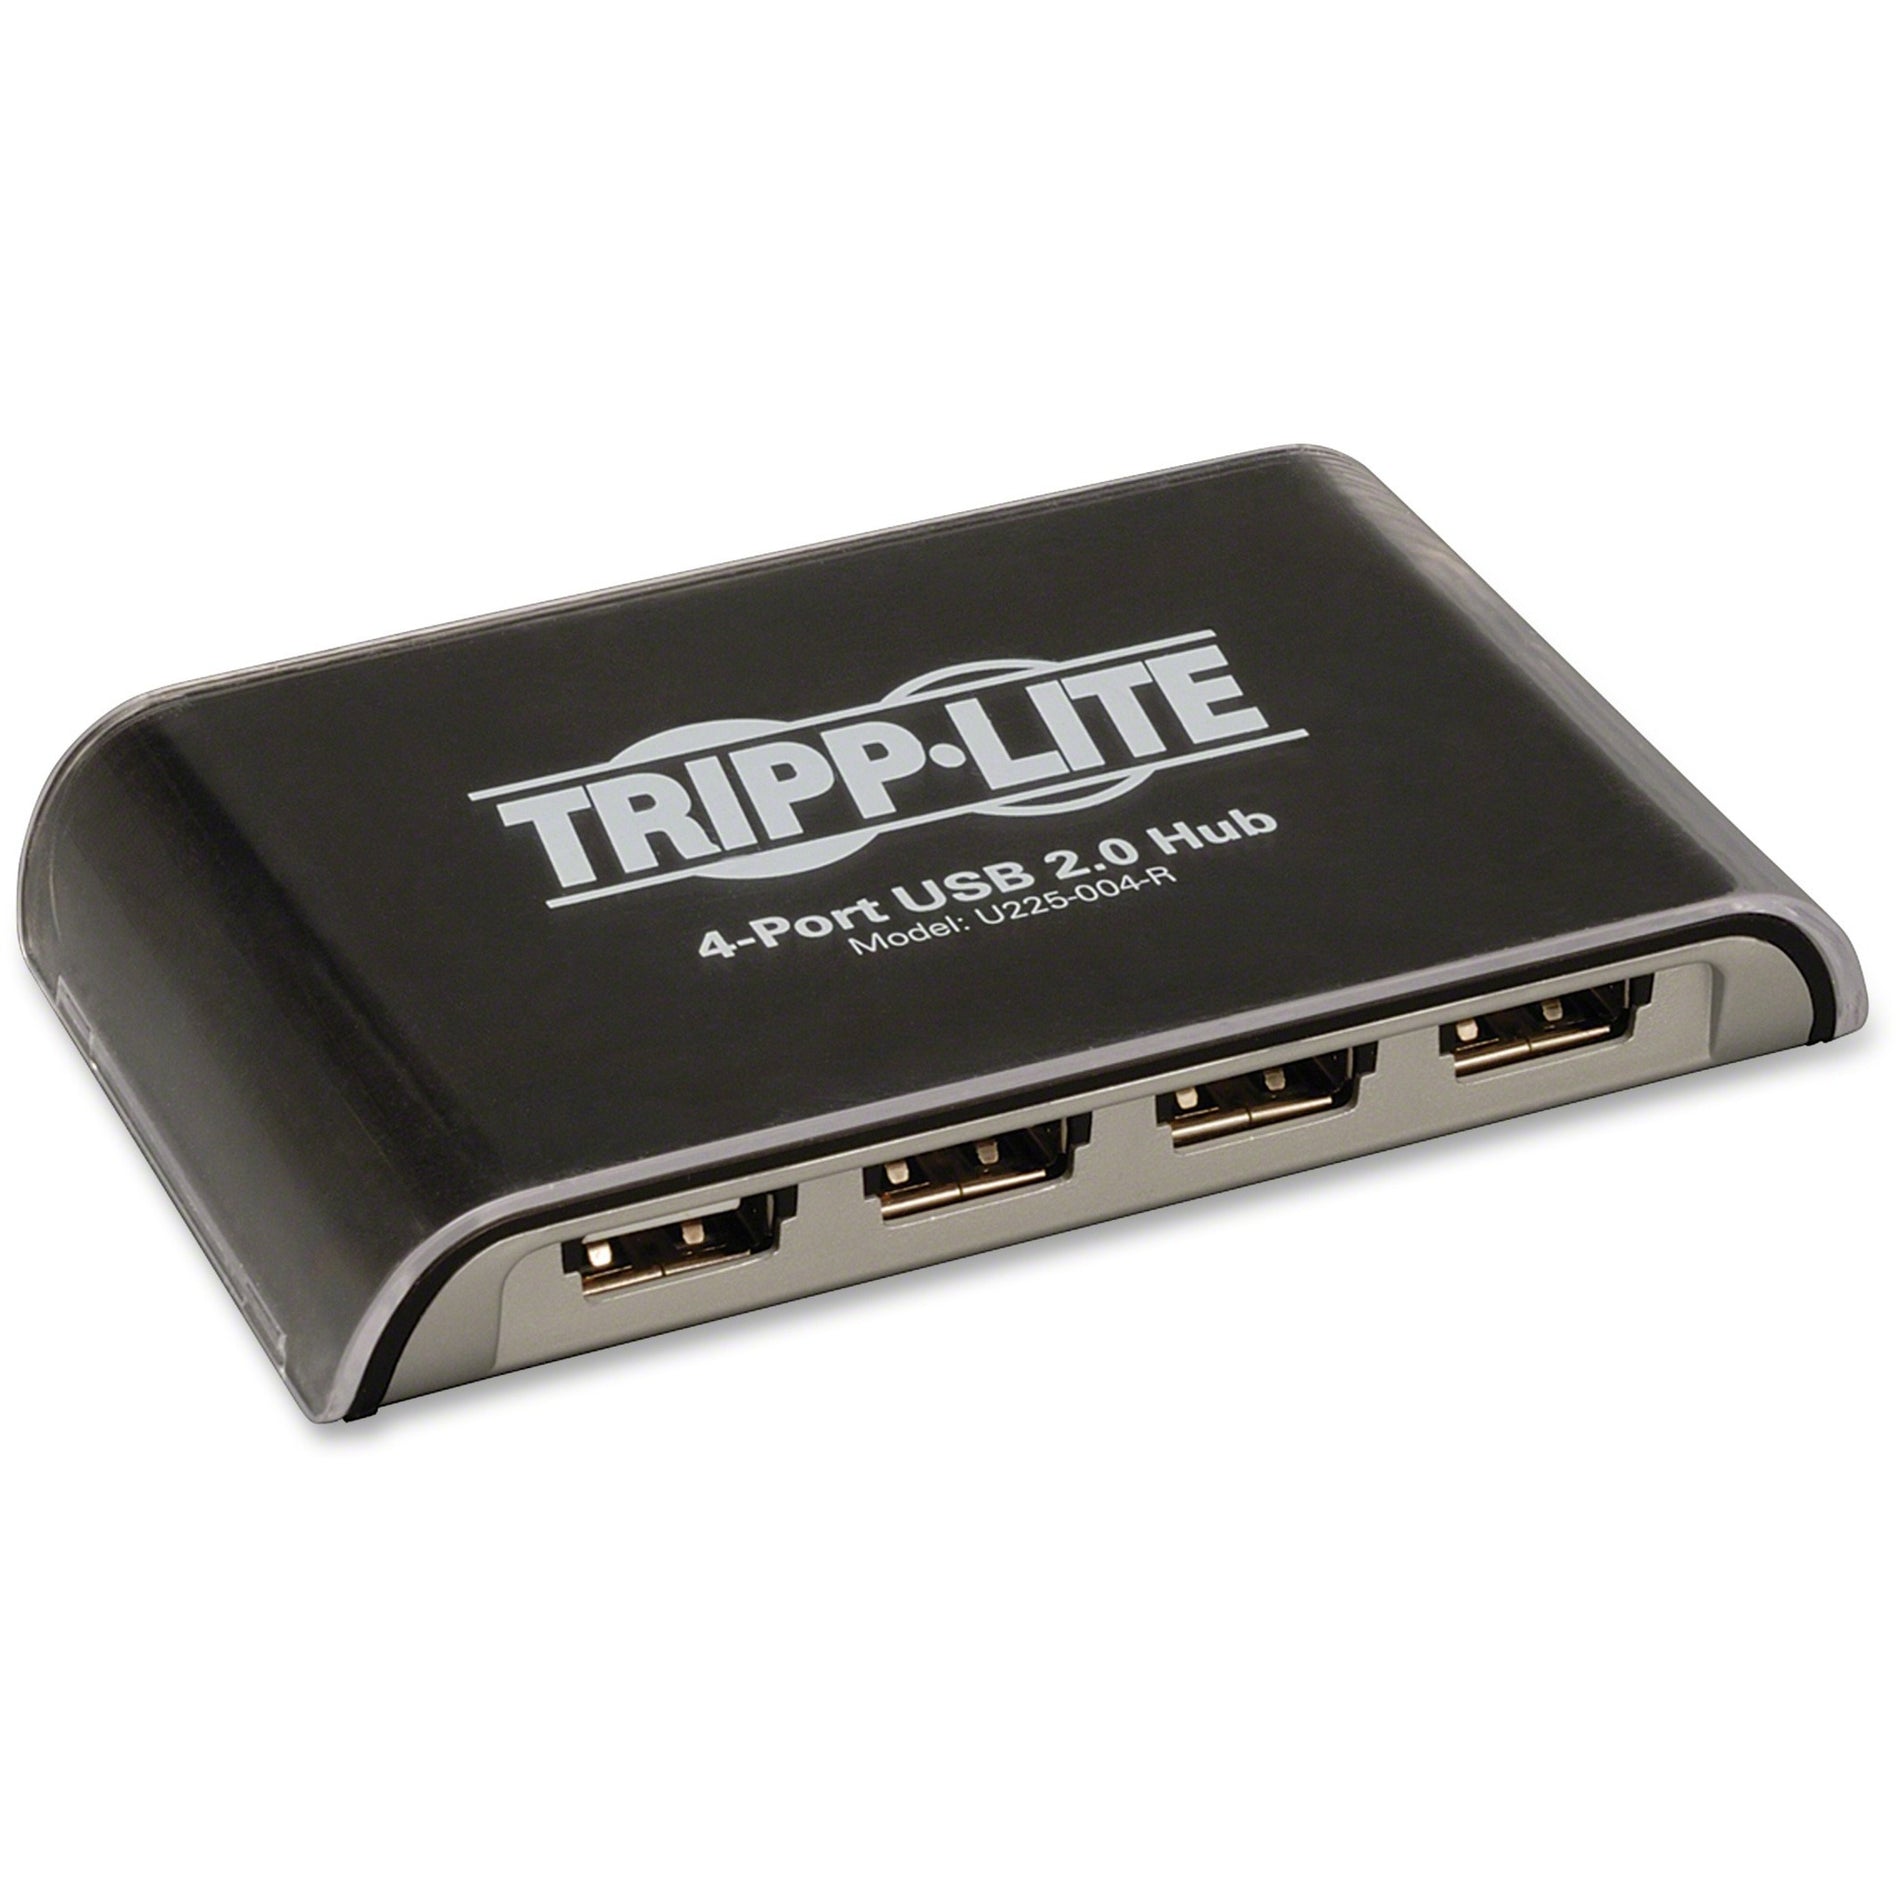 Tripp Lite U225-004-R 4-端口 USB 迷你集线器，黑色，便携小巧的 USB 集线器适用于 Mac 和 PC Tripp Lite. Tripp Lite翻译成中文是赞助者的草帽。